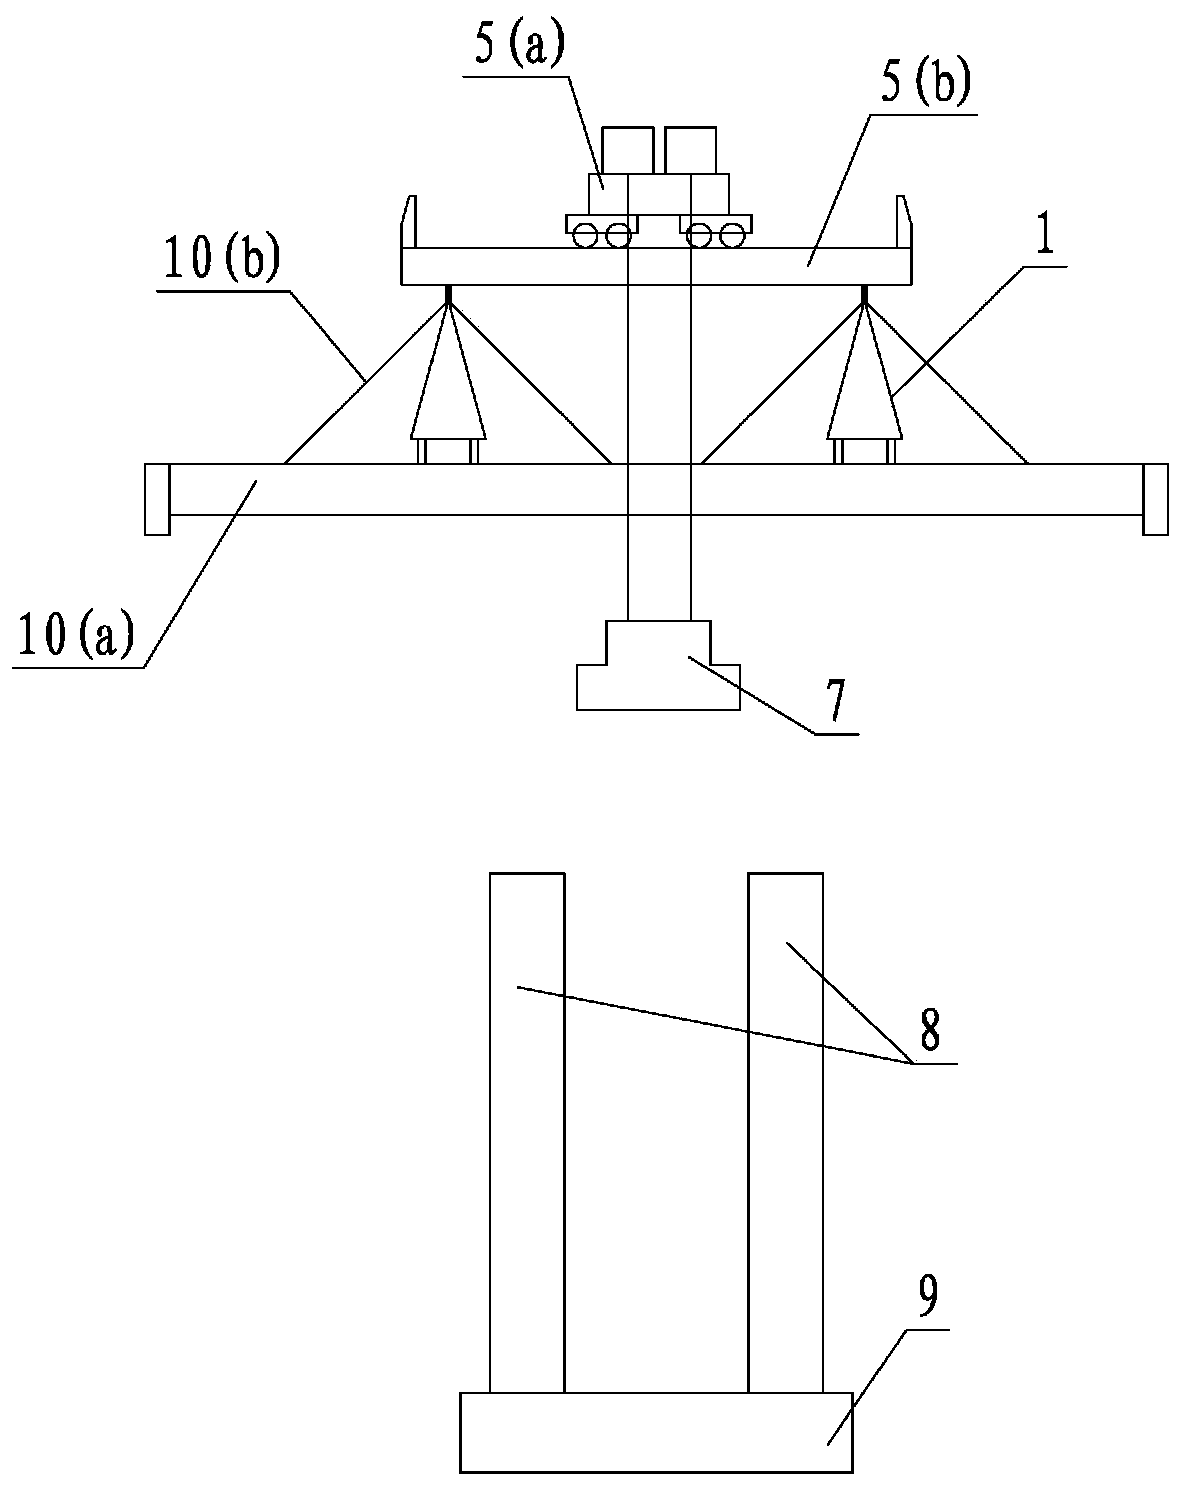 Three-working-face bridge erecting machine capable of achieving longitudinal and transverse splicing and bent cap shortcut-free segment splicing method